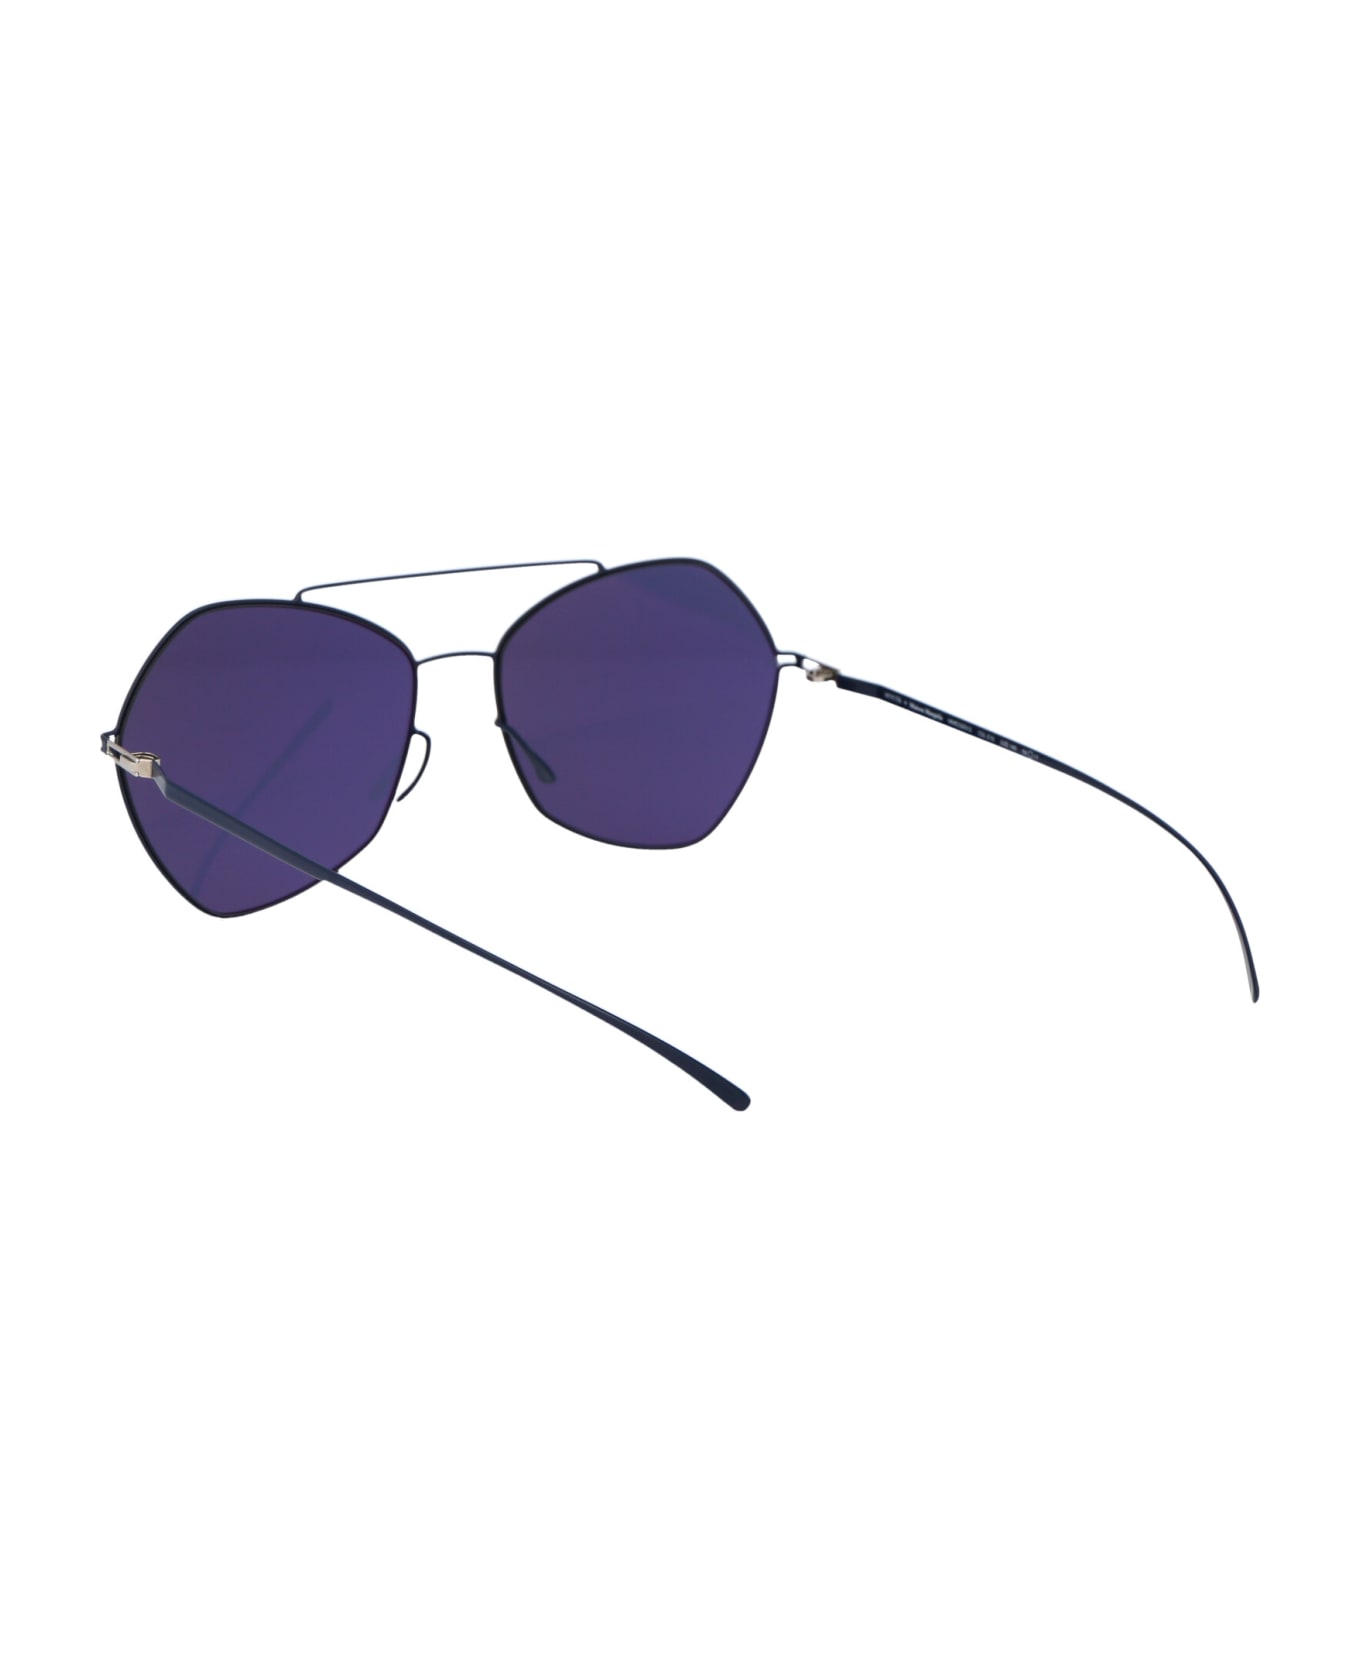 Mykita Mmesse012 Sunglasses - 261 E10 Dark Blue Indigo Solid